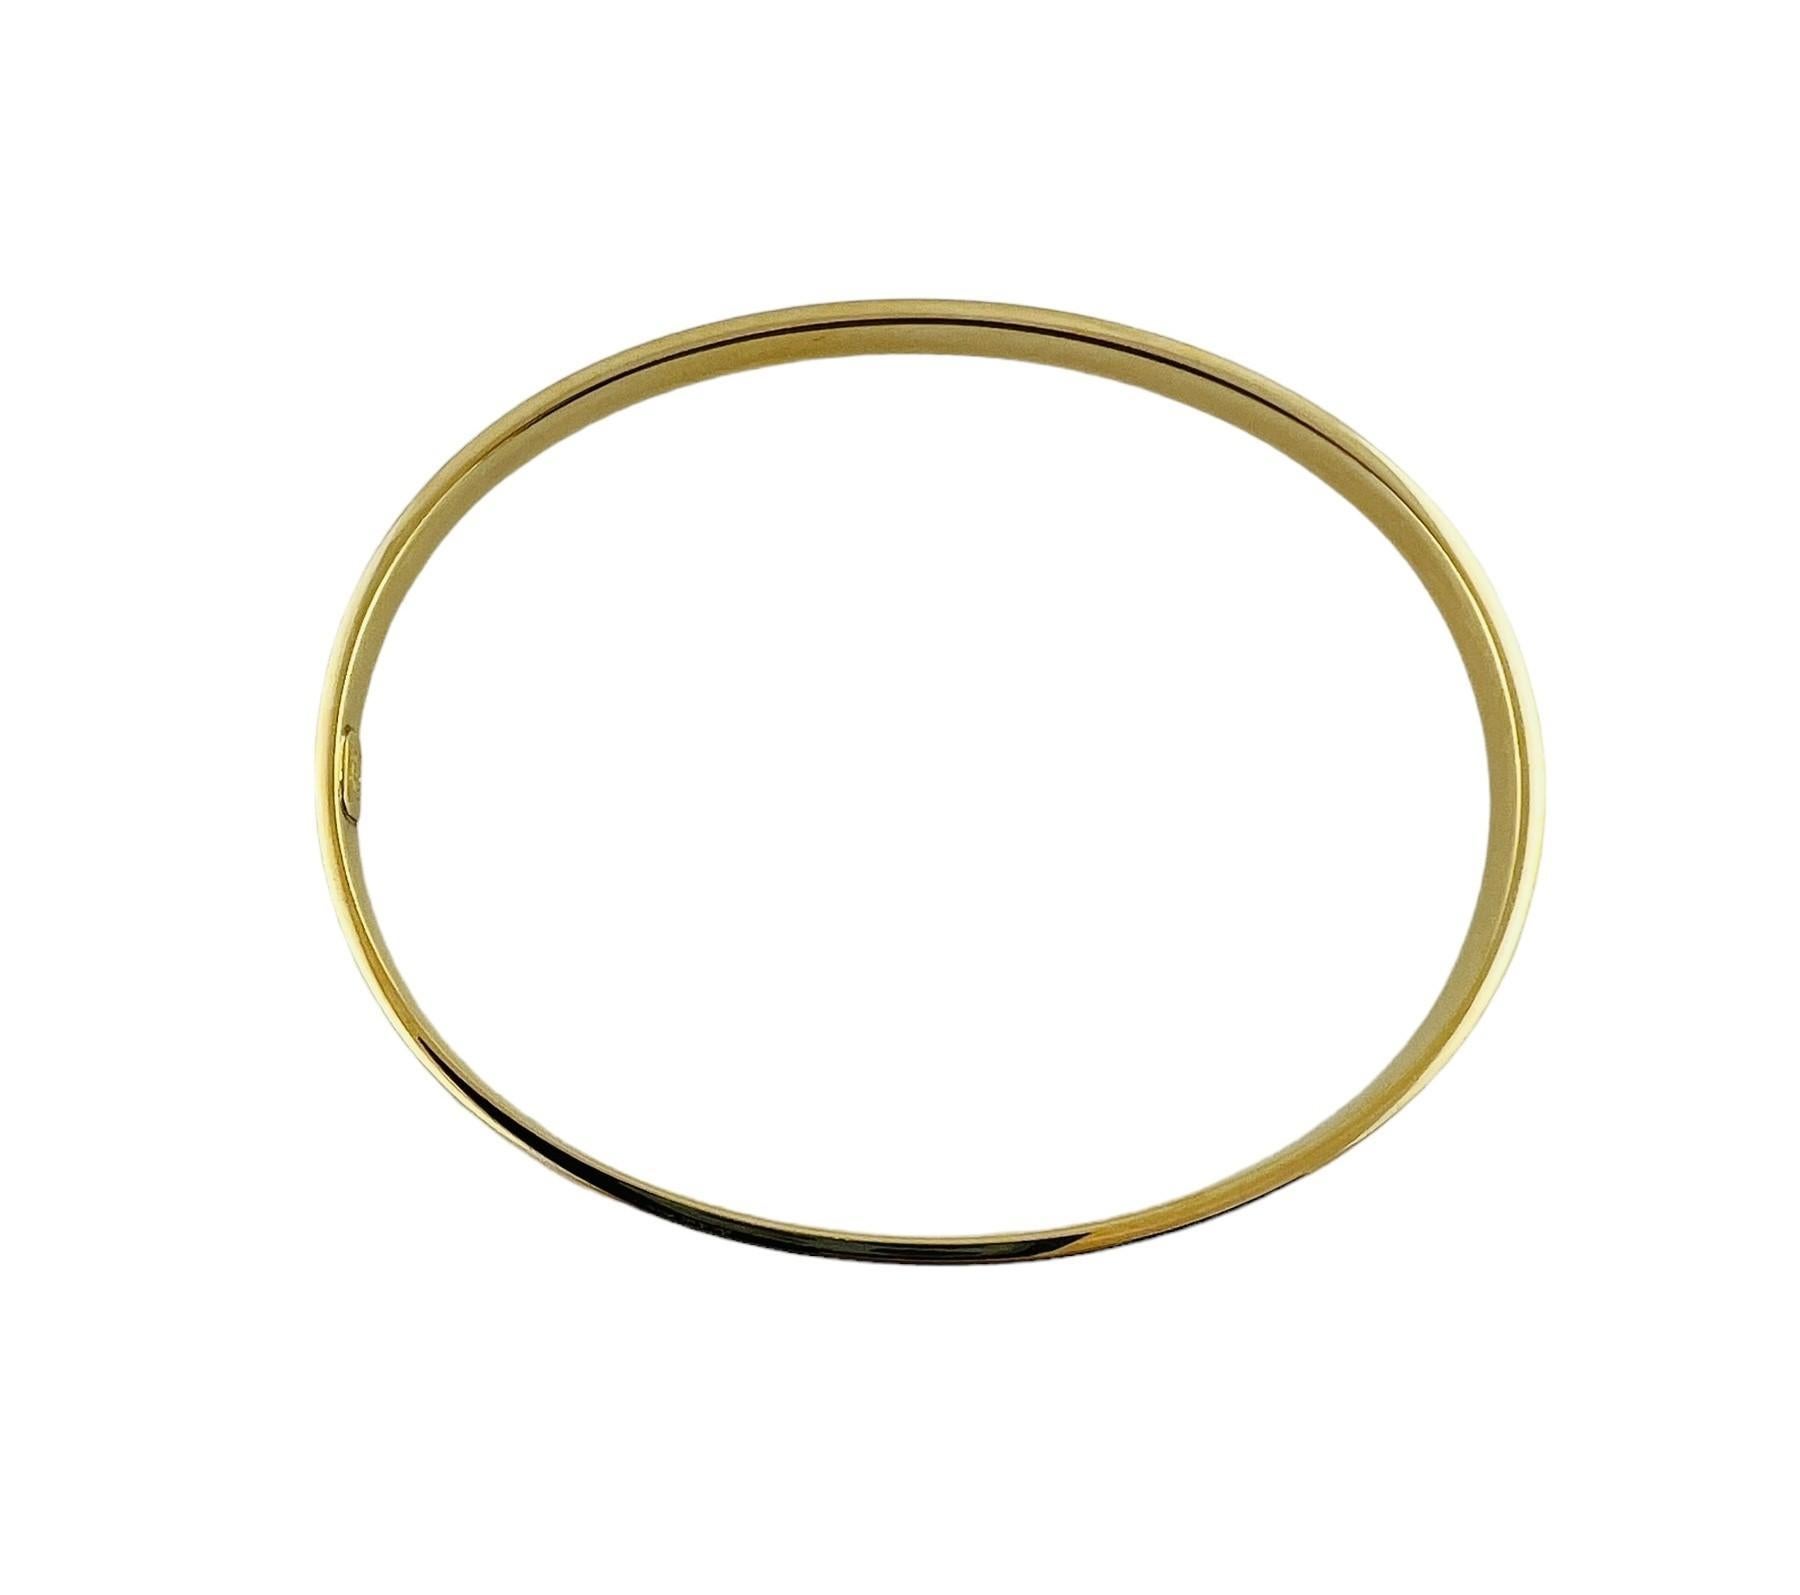 Tiffany & Co. 18K Yellow Gold Oval Bangle Bracelet #16675 2